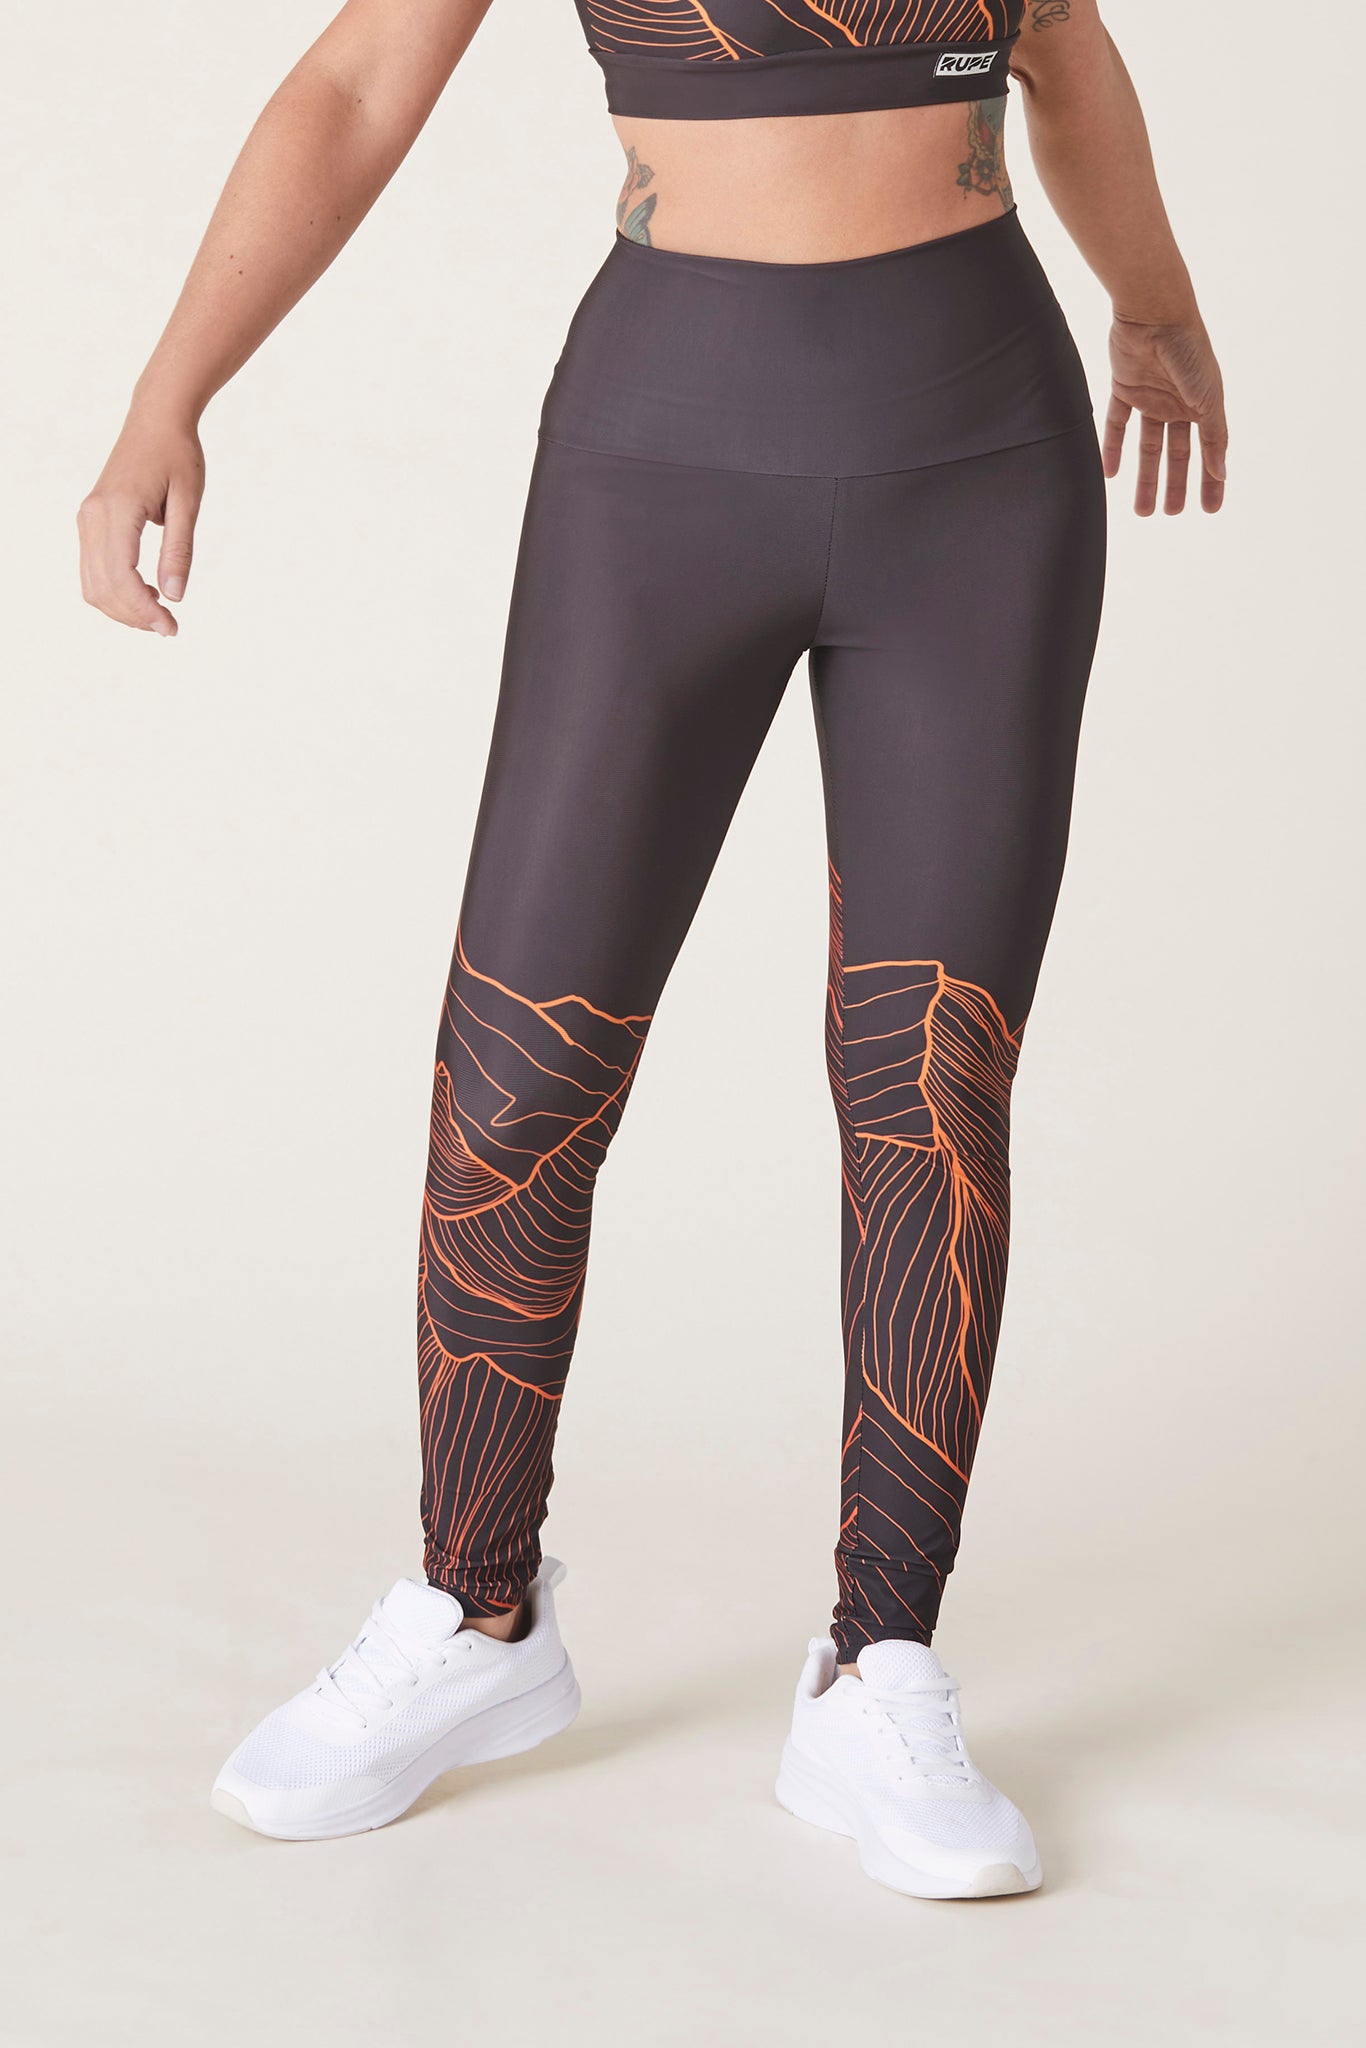 Women's technical leggings – black mountain pattern